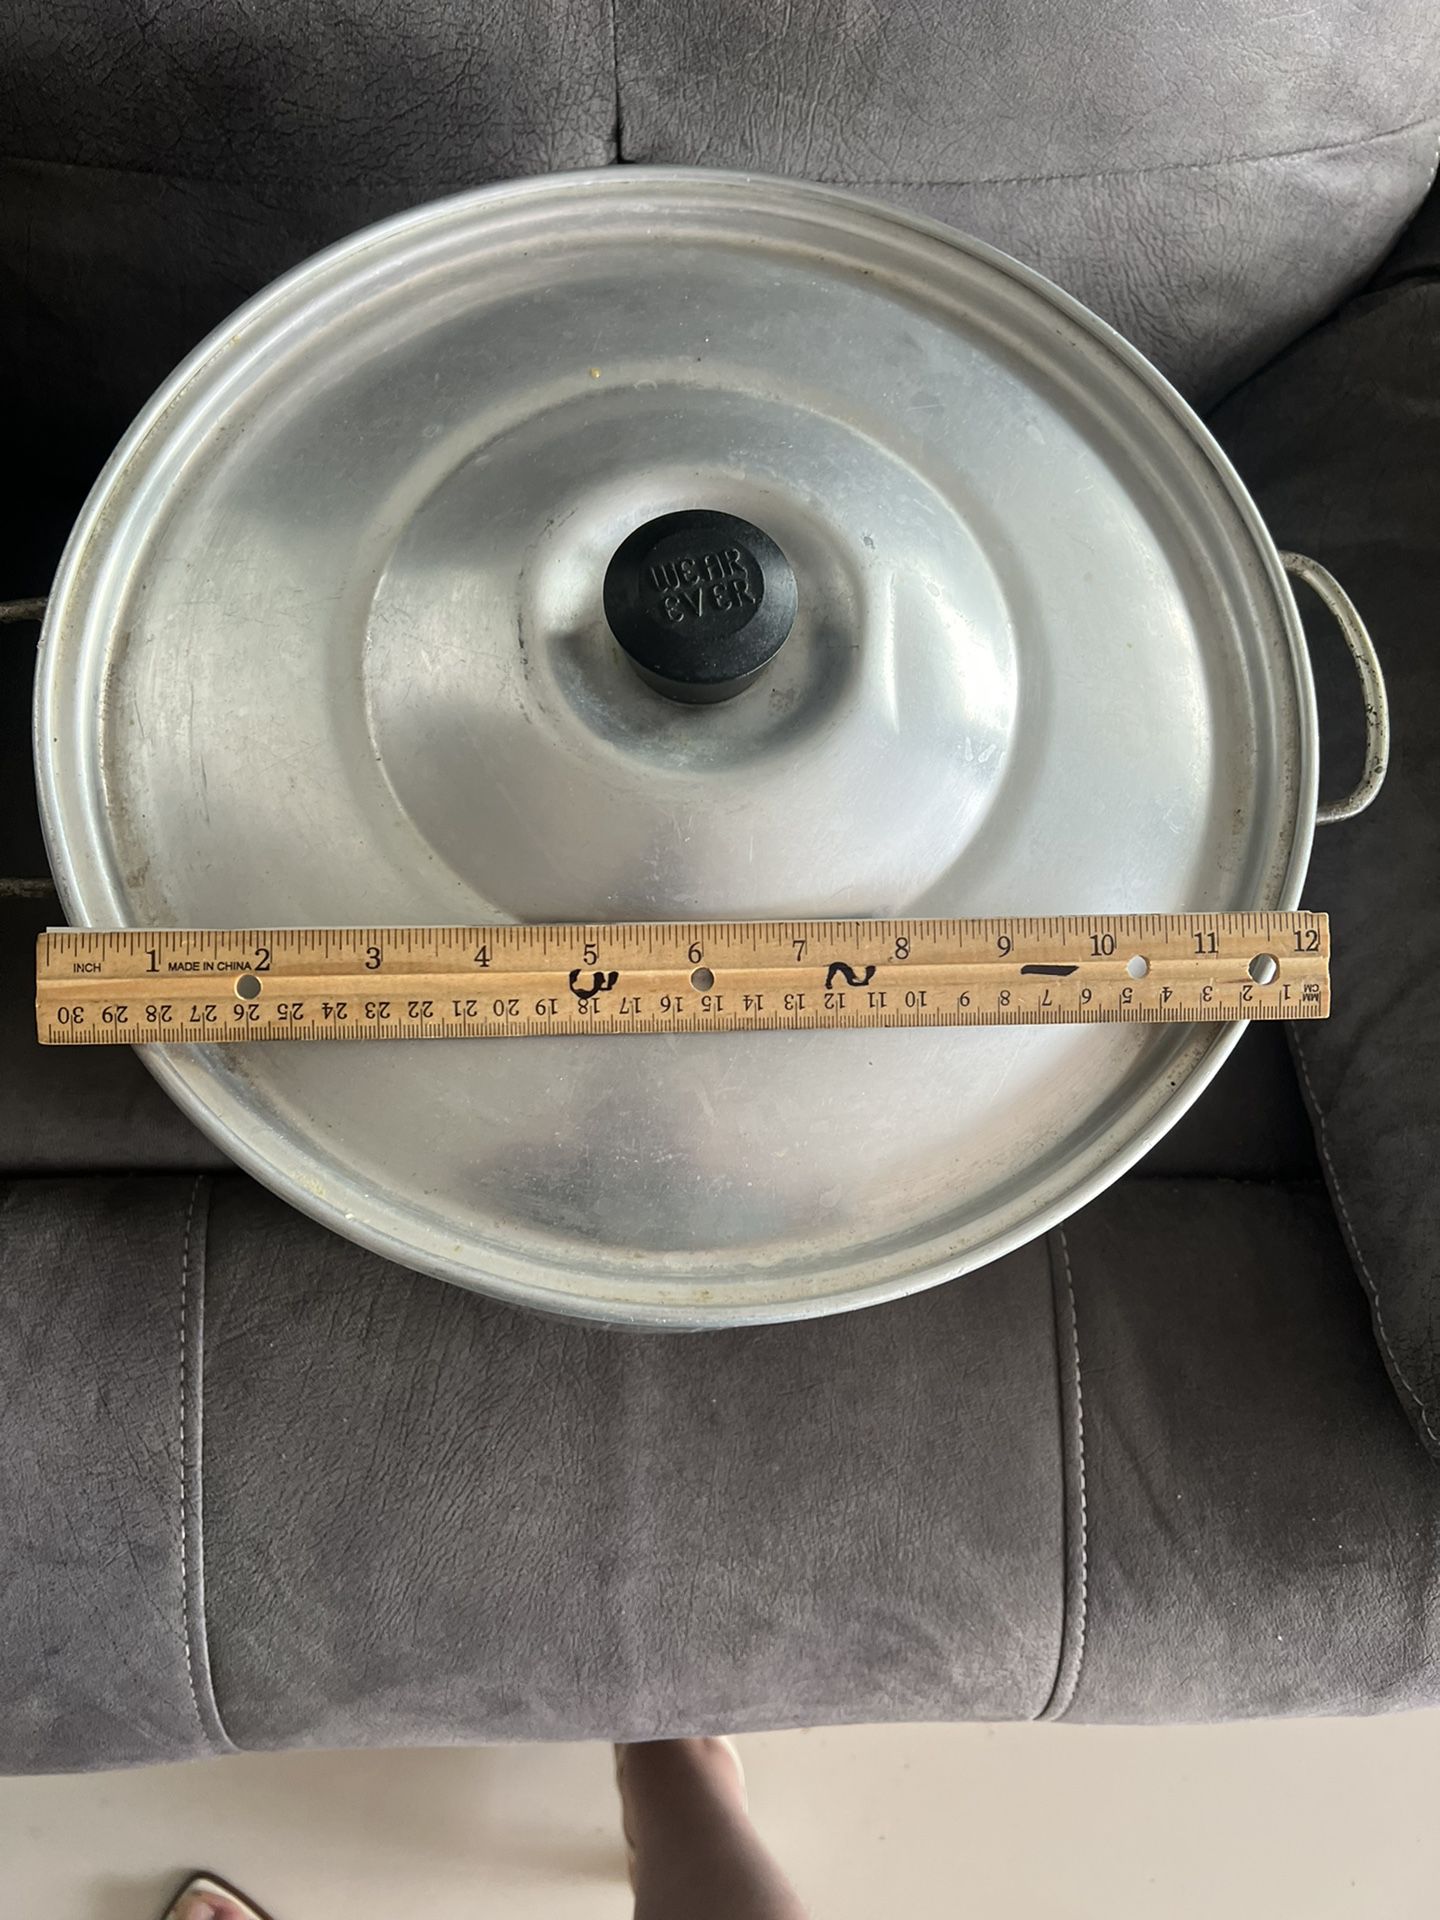 Vintage Wear-Ever Large 24 qts. Aluminum Cooking Pot w/Lid No. 4098 -  general for sale - by owner - craigslist